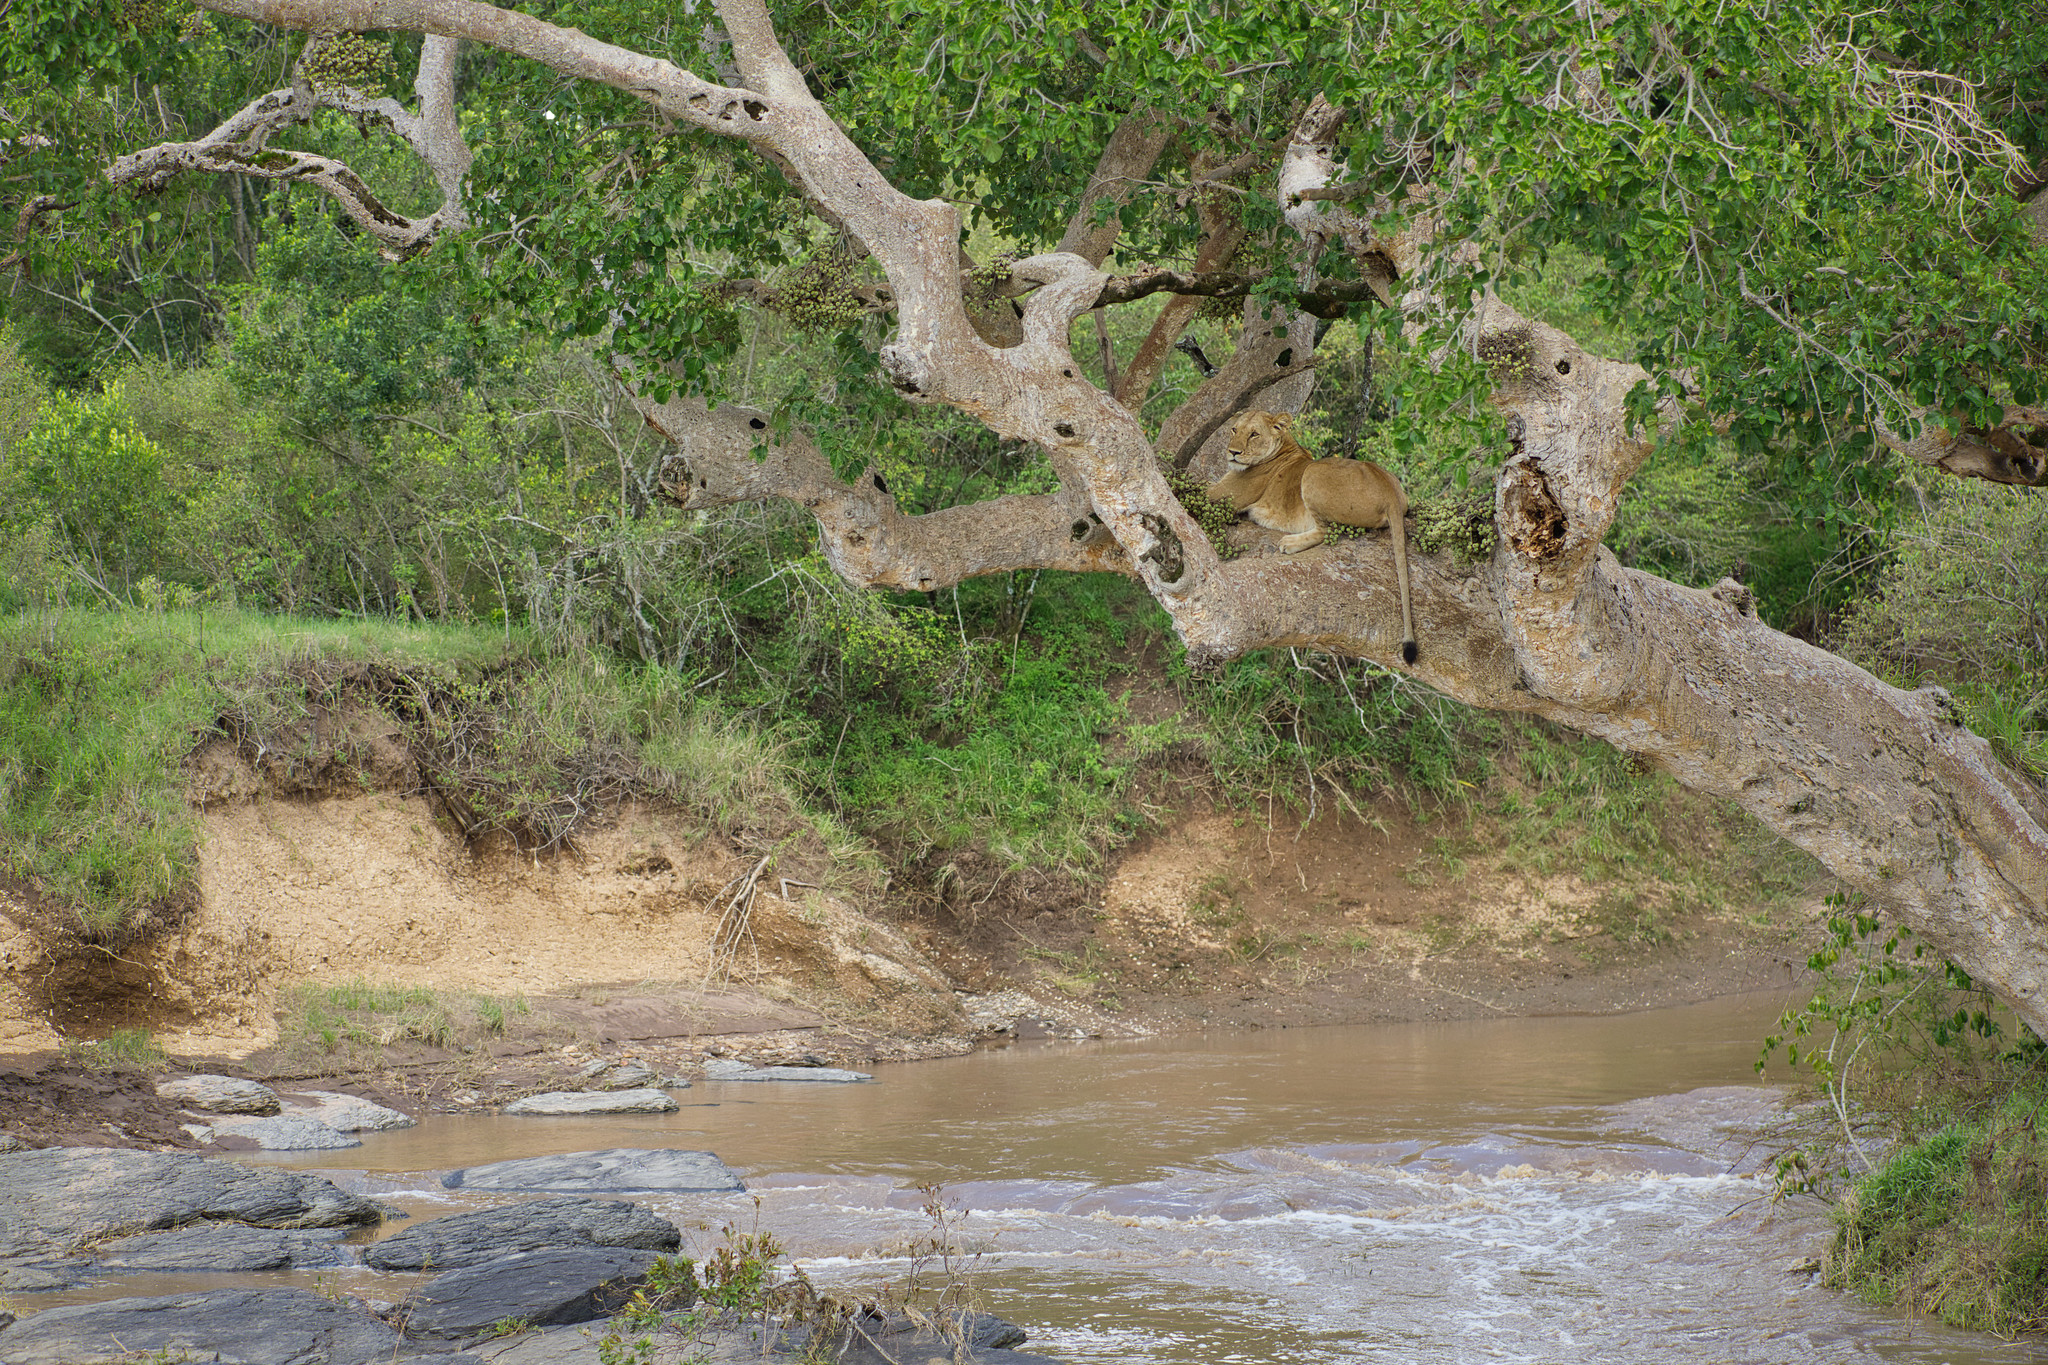 Lion in tree - Masai Mara